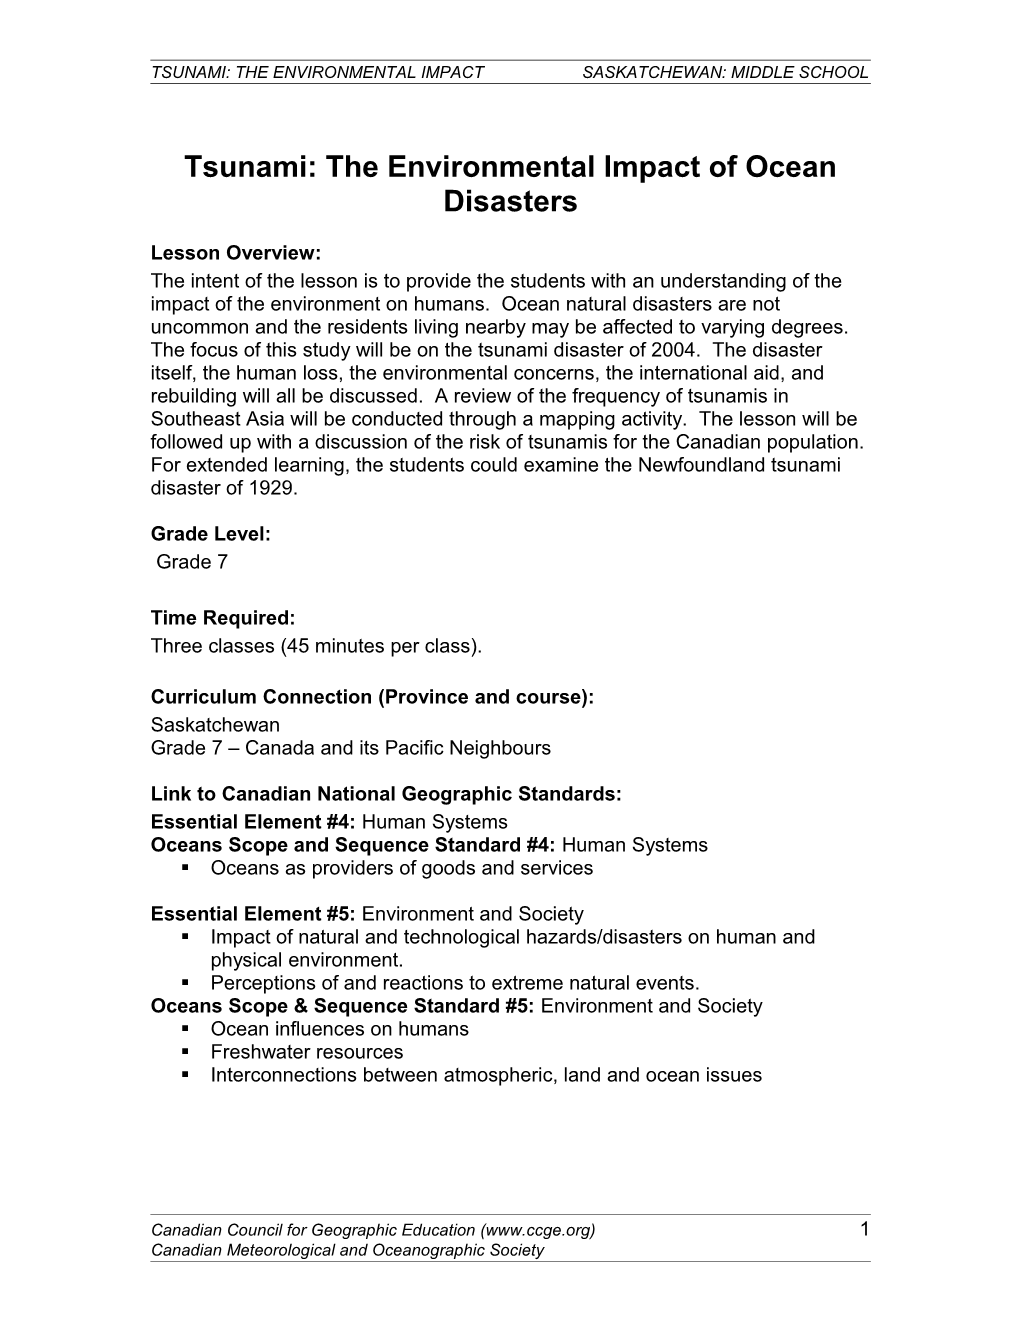 Tsunami: the Environmental Impact of Ocean Disasters